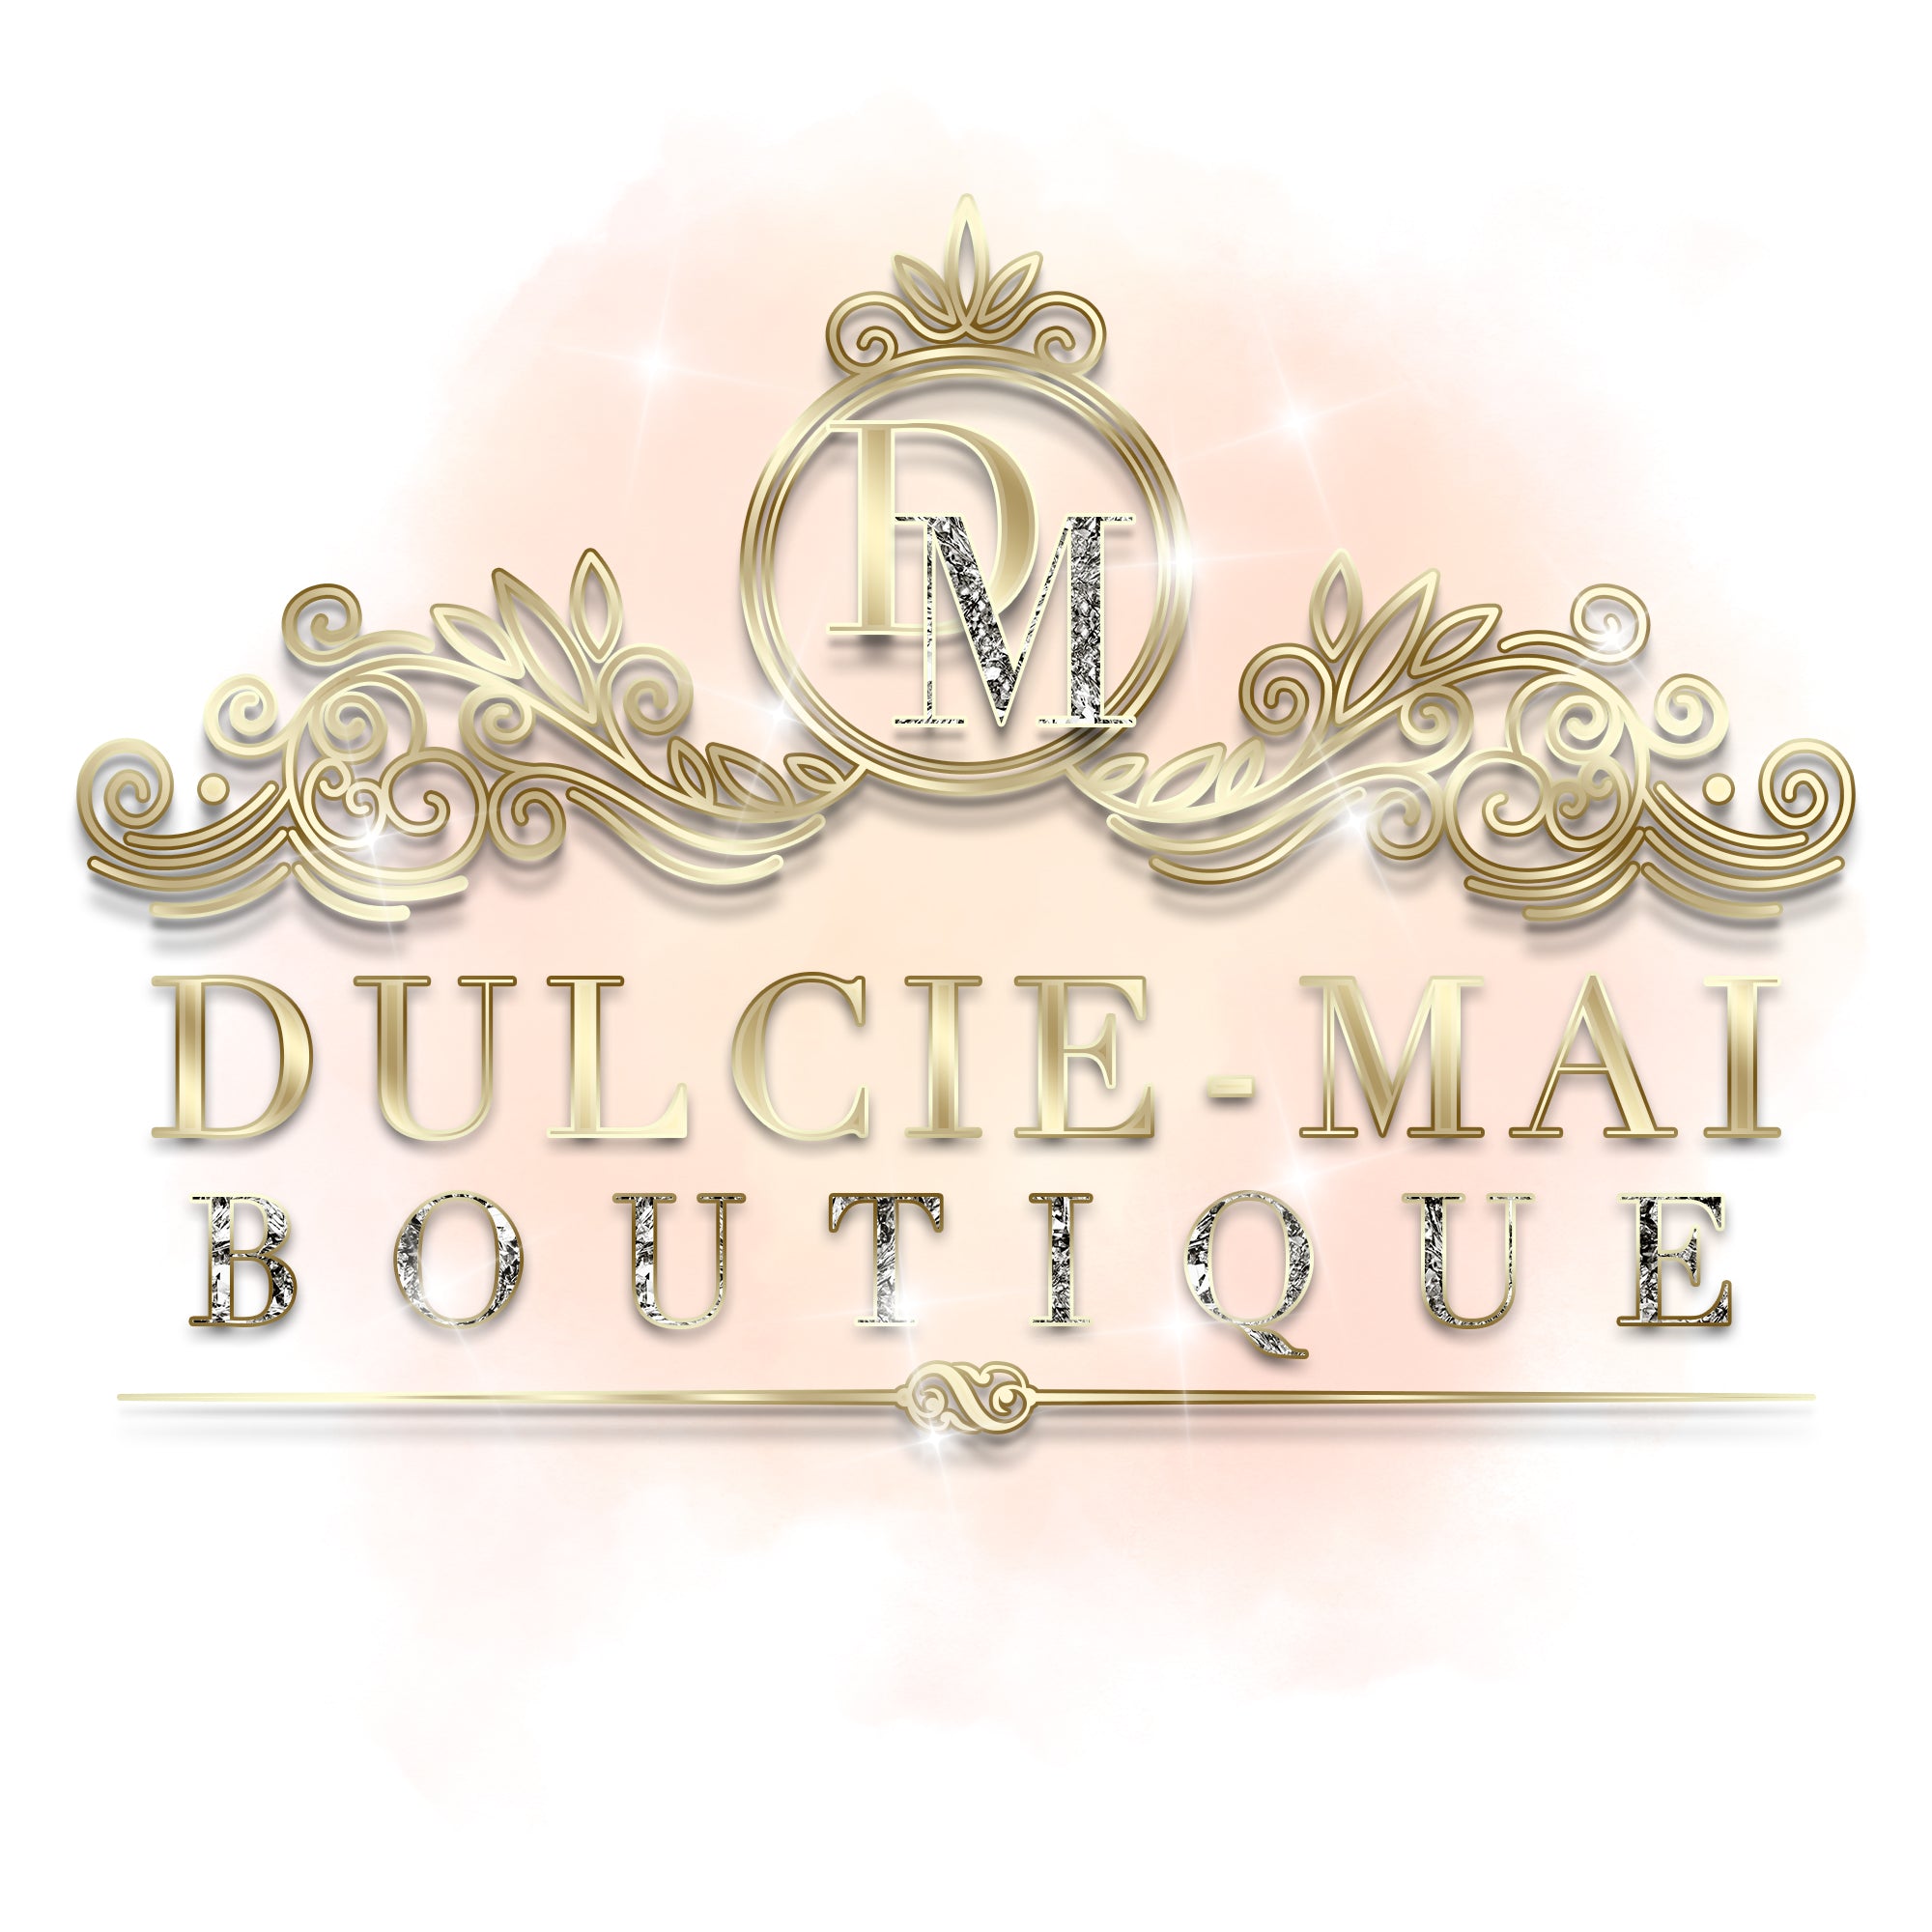 Dulcie-Mai Boutique